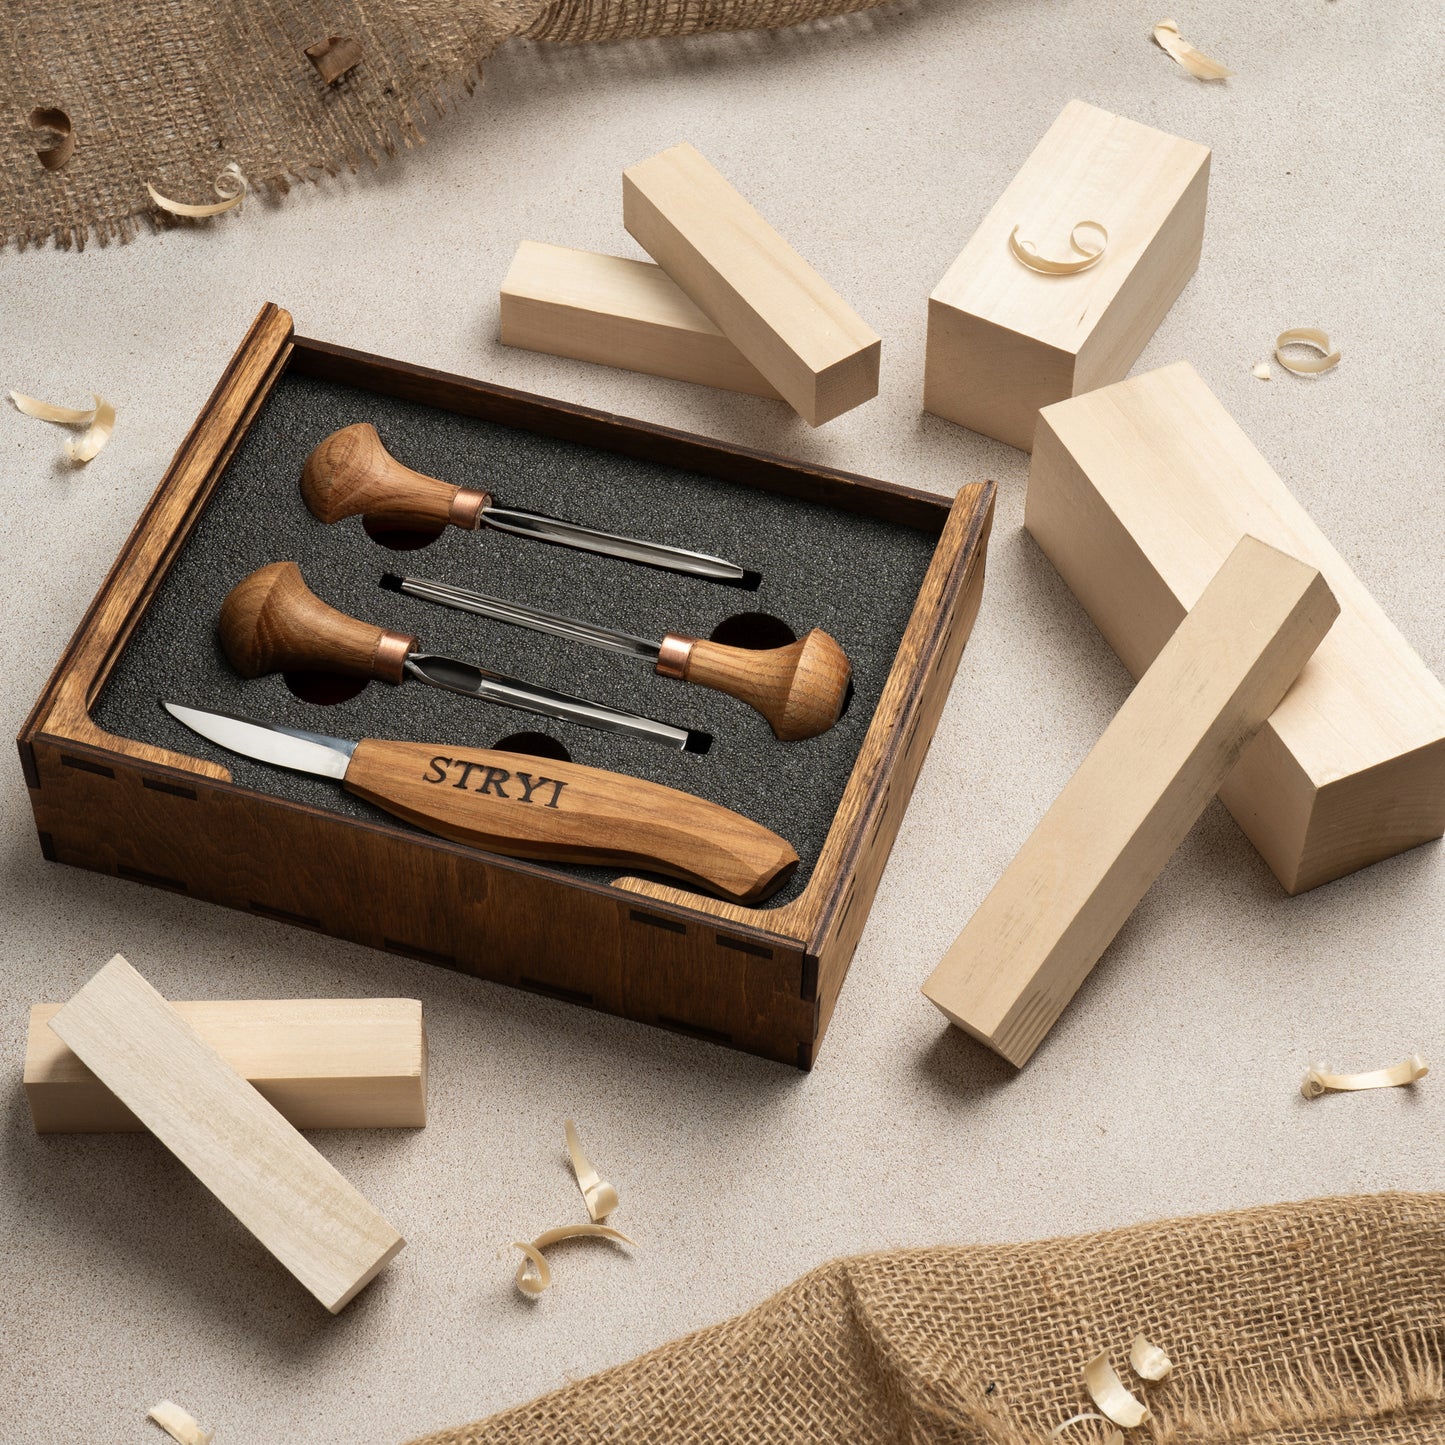 Basic wood carving figure tools set , 4pcs STRYI wood carving tools, Сarving kit, Set for whittling figures